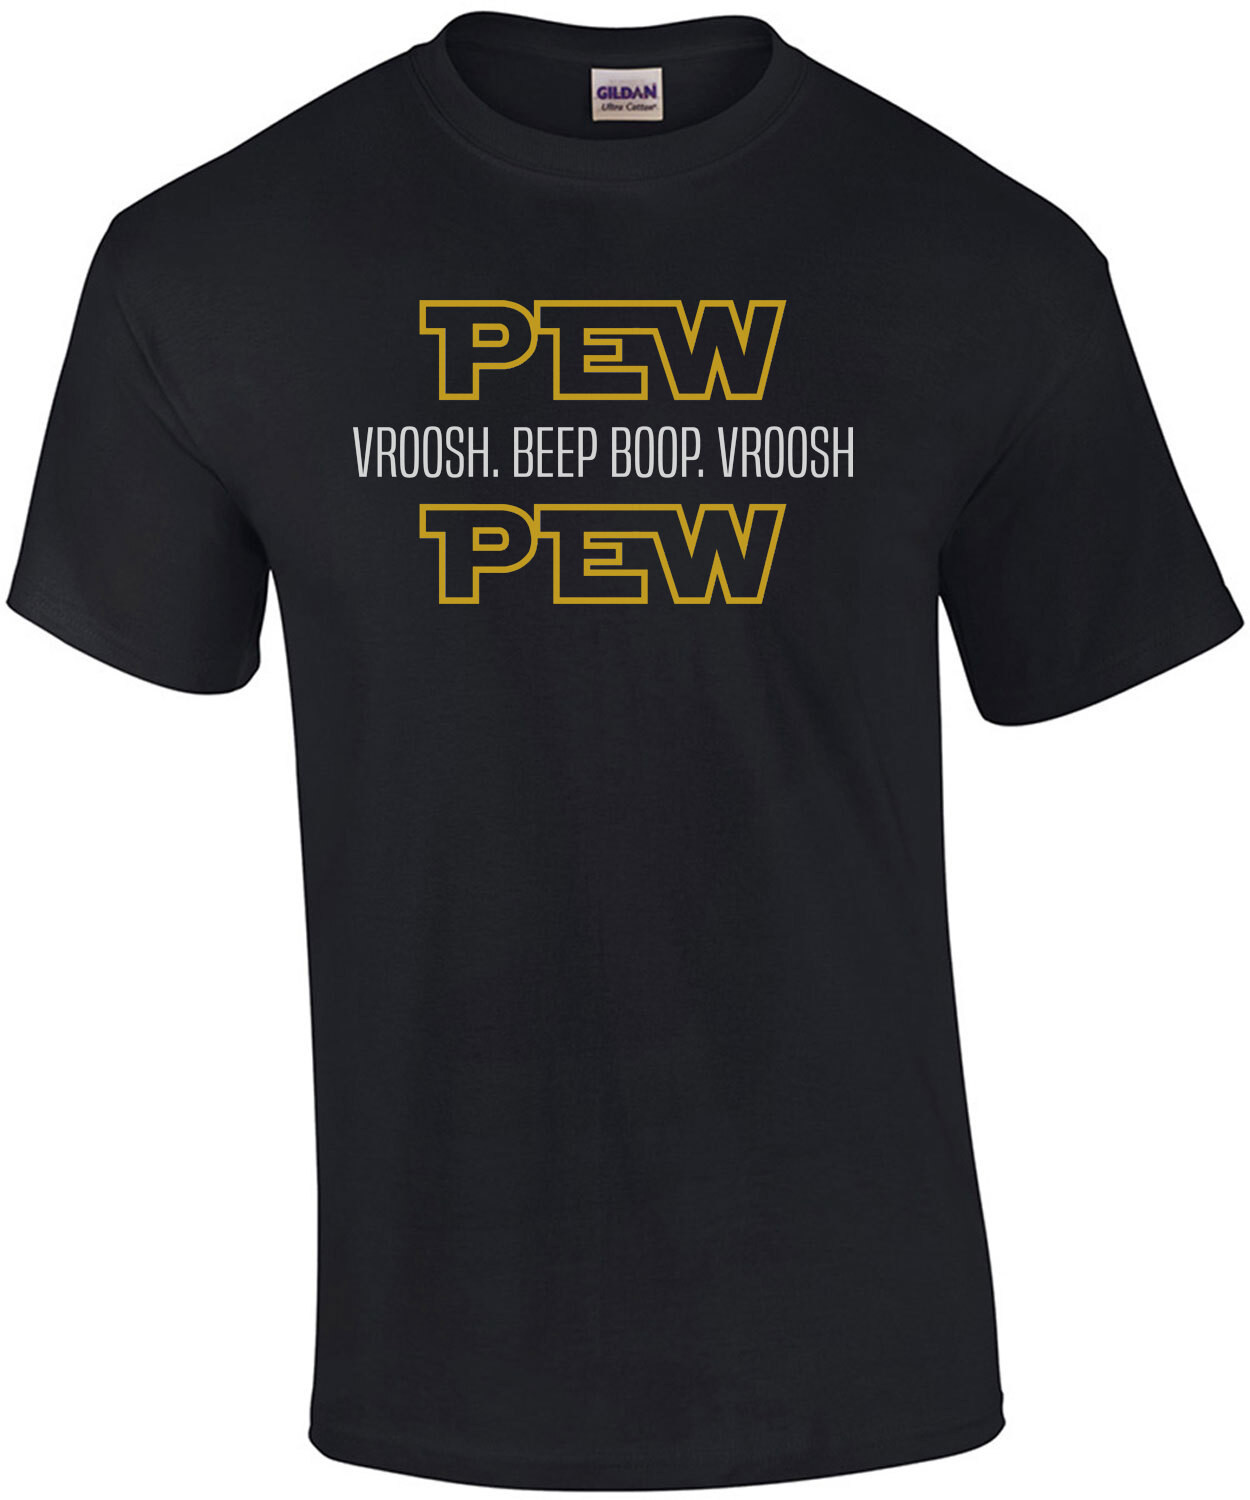 Pew Vroosh Beep Boop Vroosh Pew - Funny T-Shirt